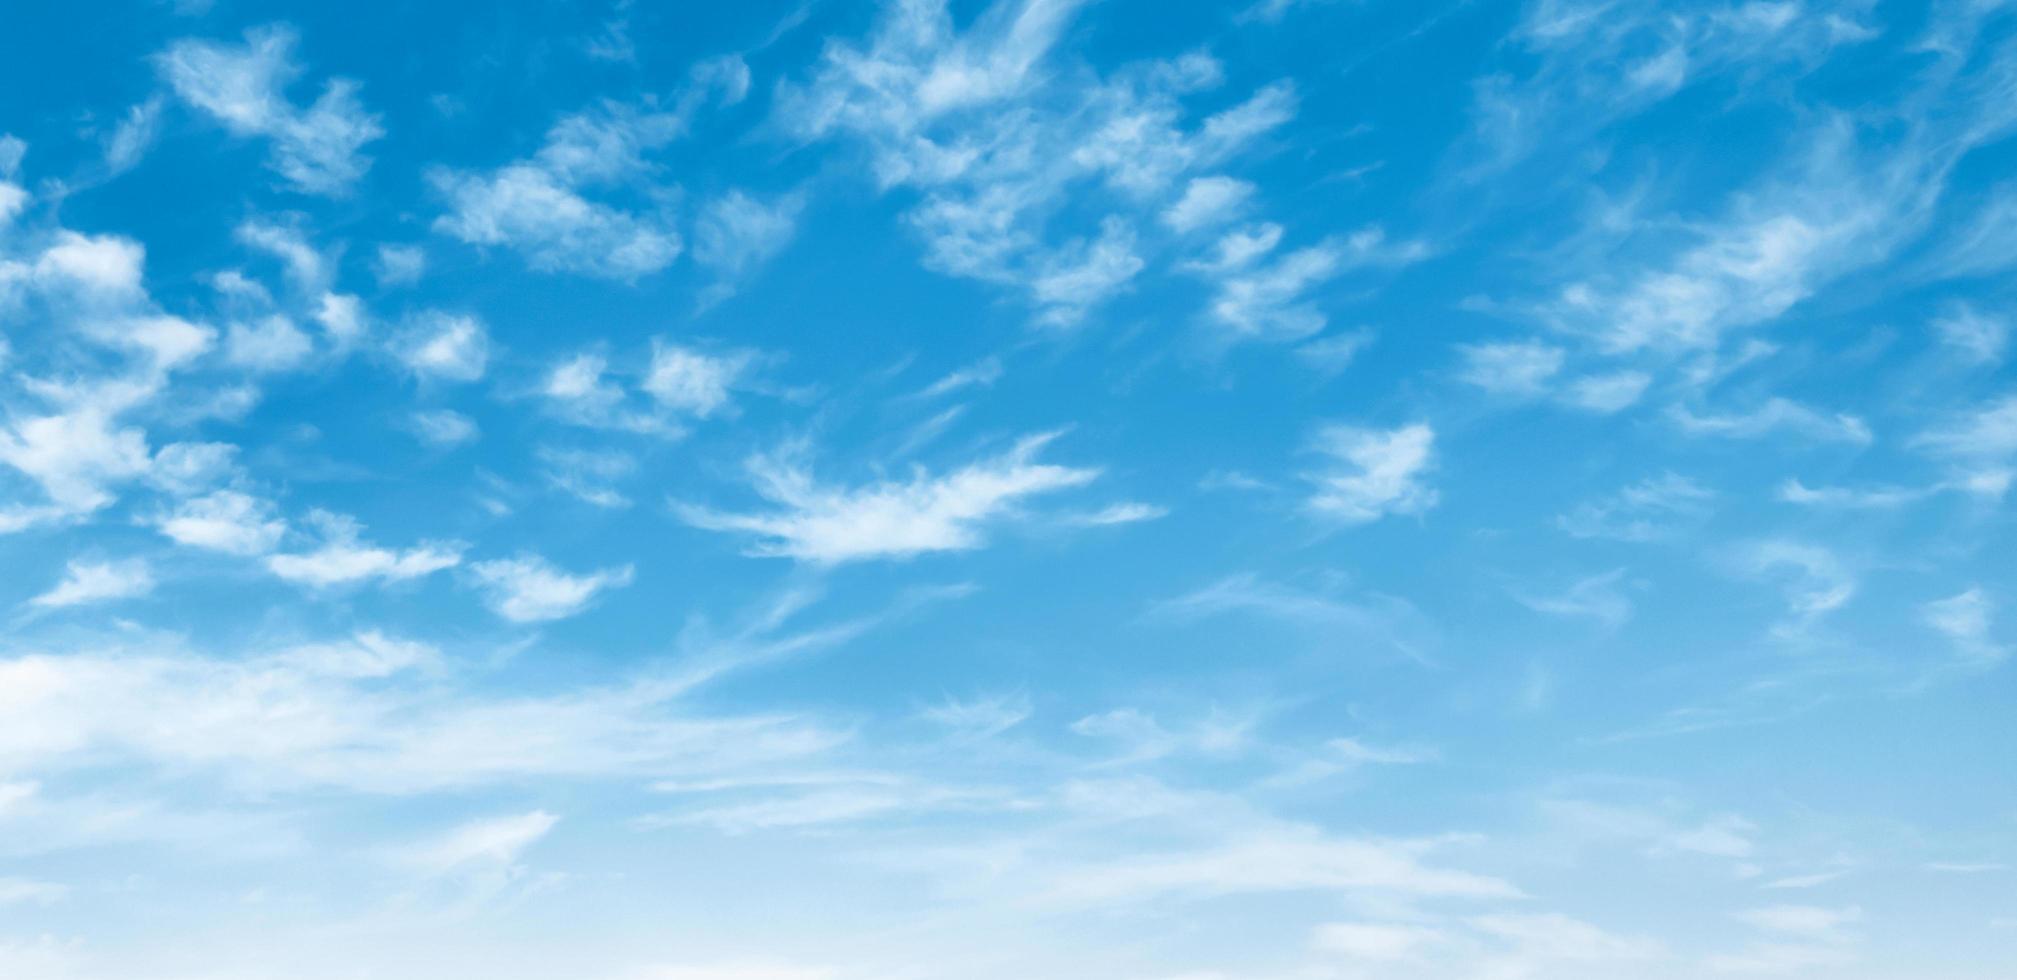 panorama ciel bleu avec fond de nuage blanc photo